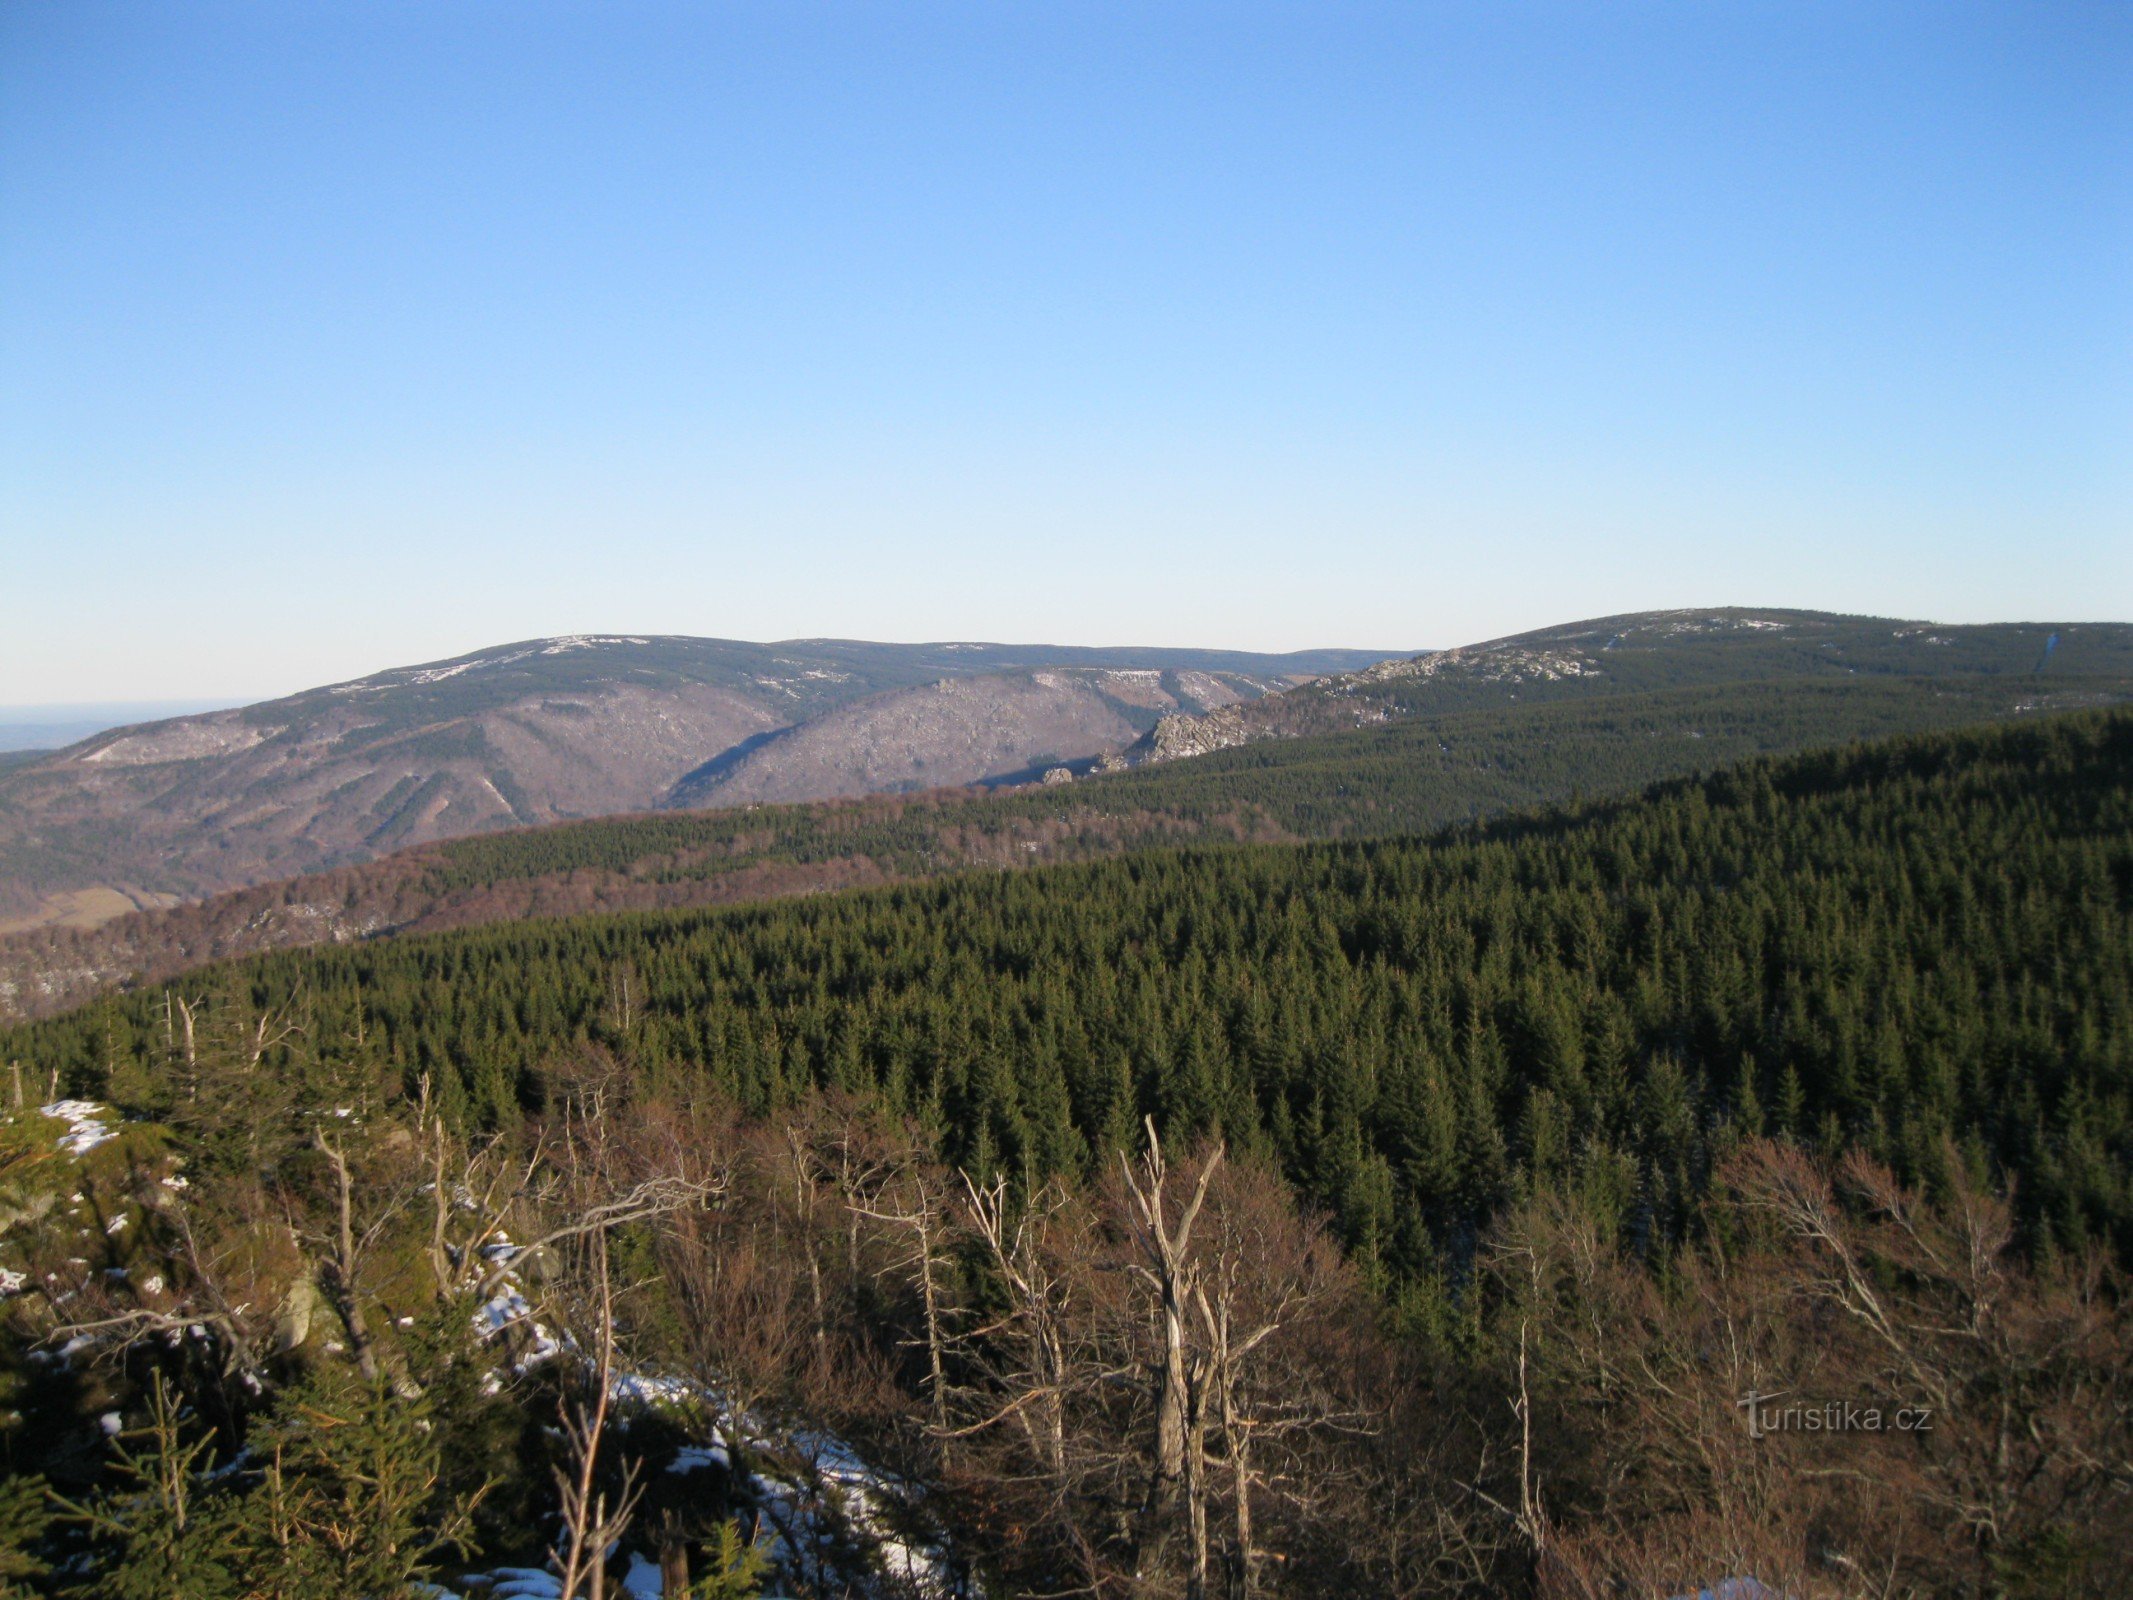 Smrk (イゼラ山脈のチェコの部分で最も高い山) のビュー。